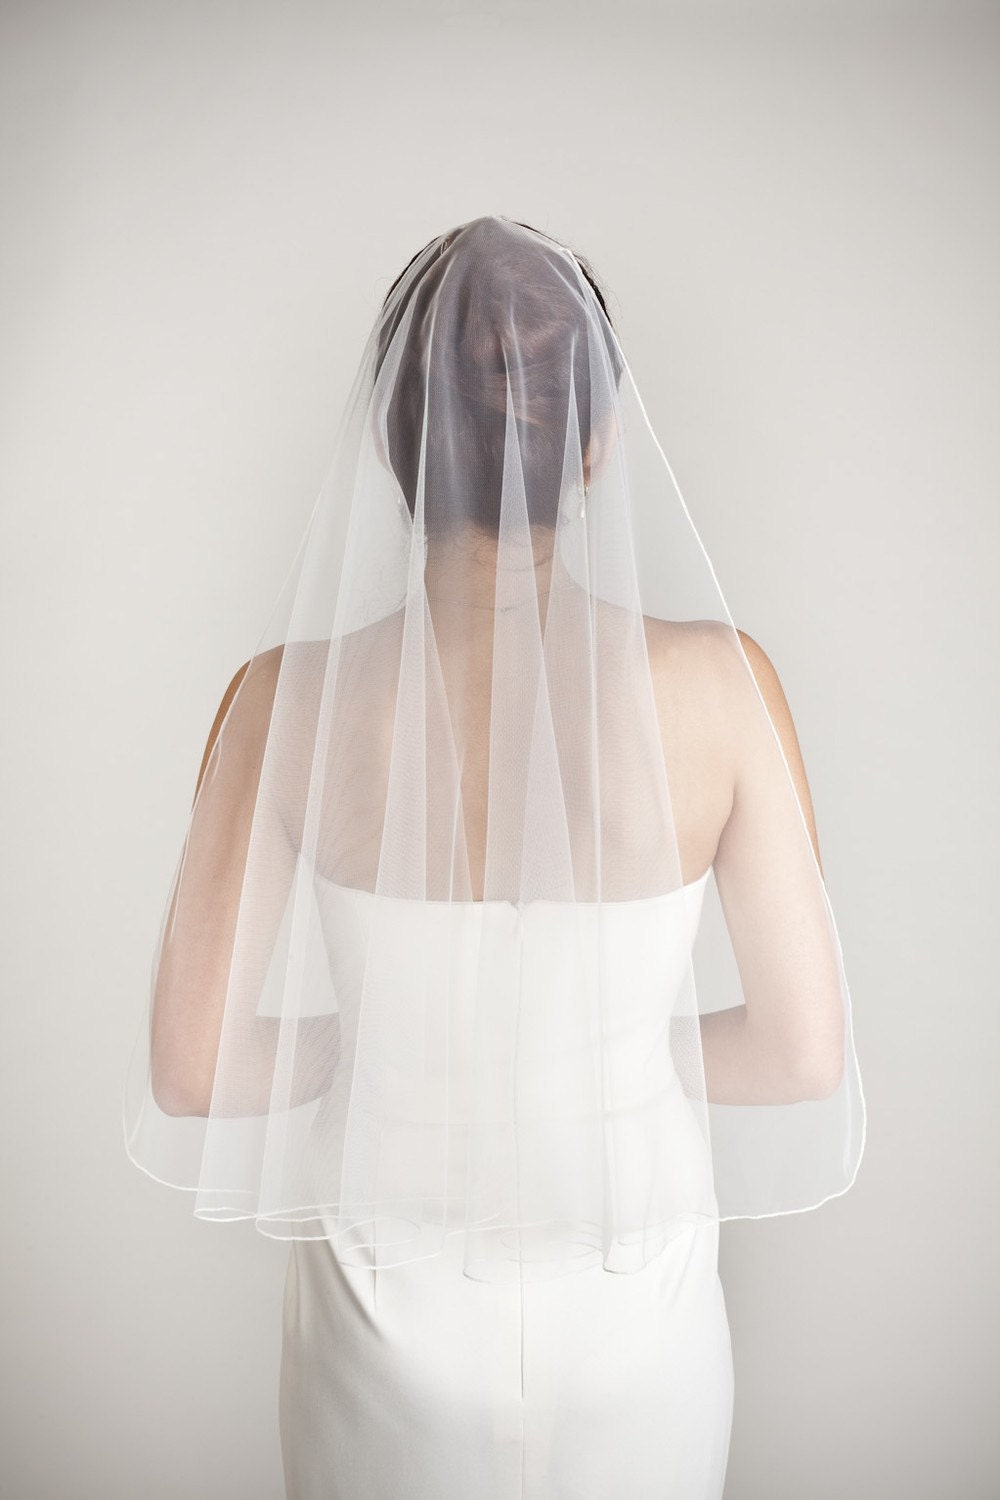 Waterfall - one layer wedding bridal veil, 30 inch (waist length) with a thin seam edge, white or ivory - BridalAmbiance